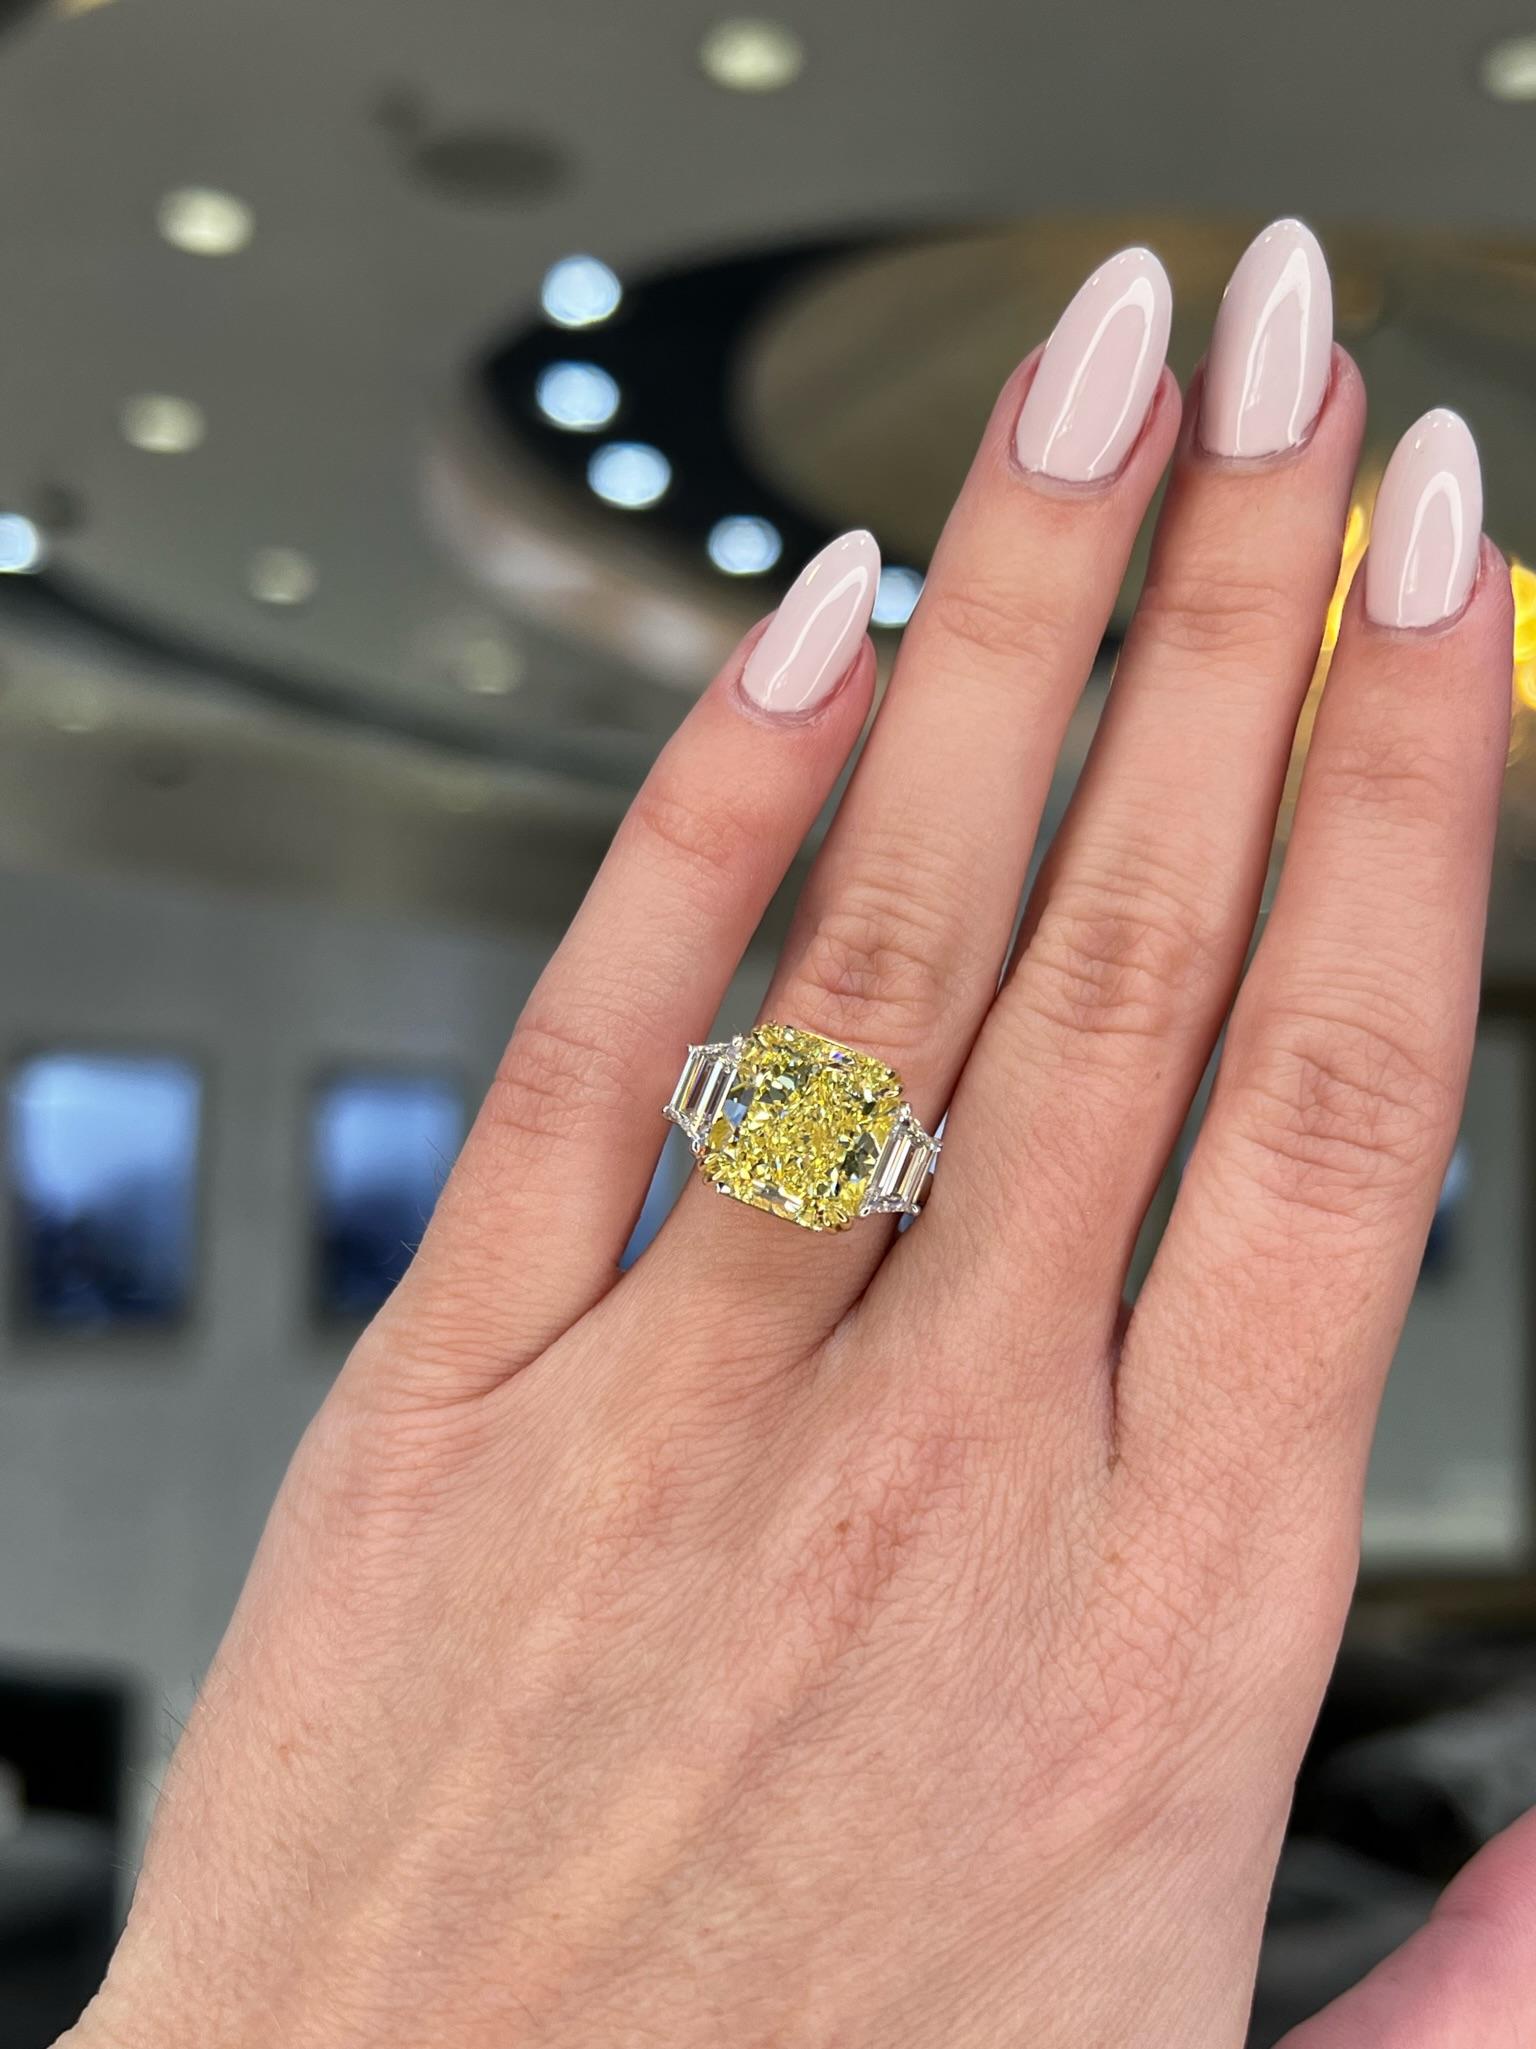 David Rosenberg 7.81 Carat Radiant Fancy Yellow VS1 GIA Diamond Engagement Ring For Sale 6